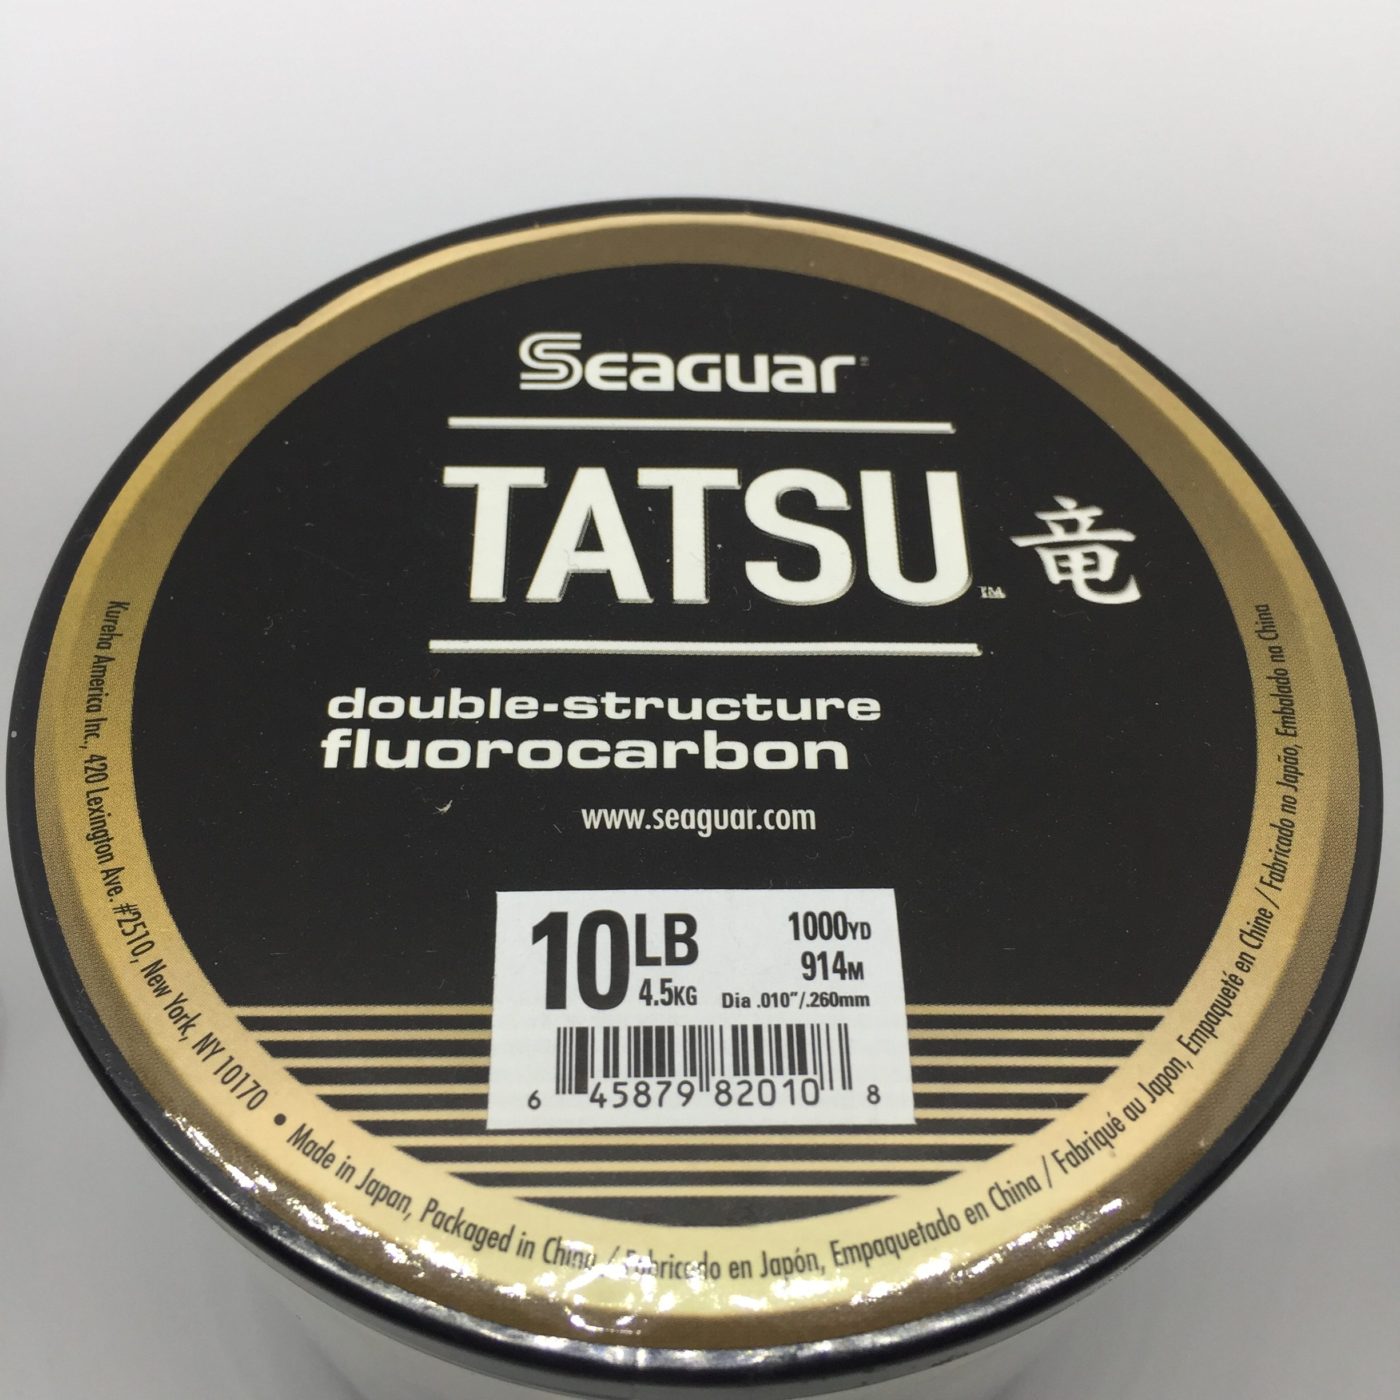 Seaguar Tatsu Fluorocarbon 17lb